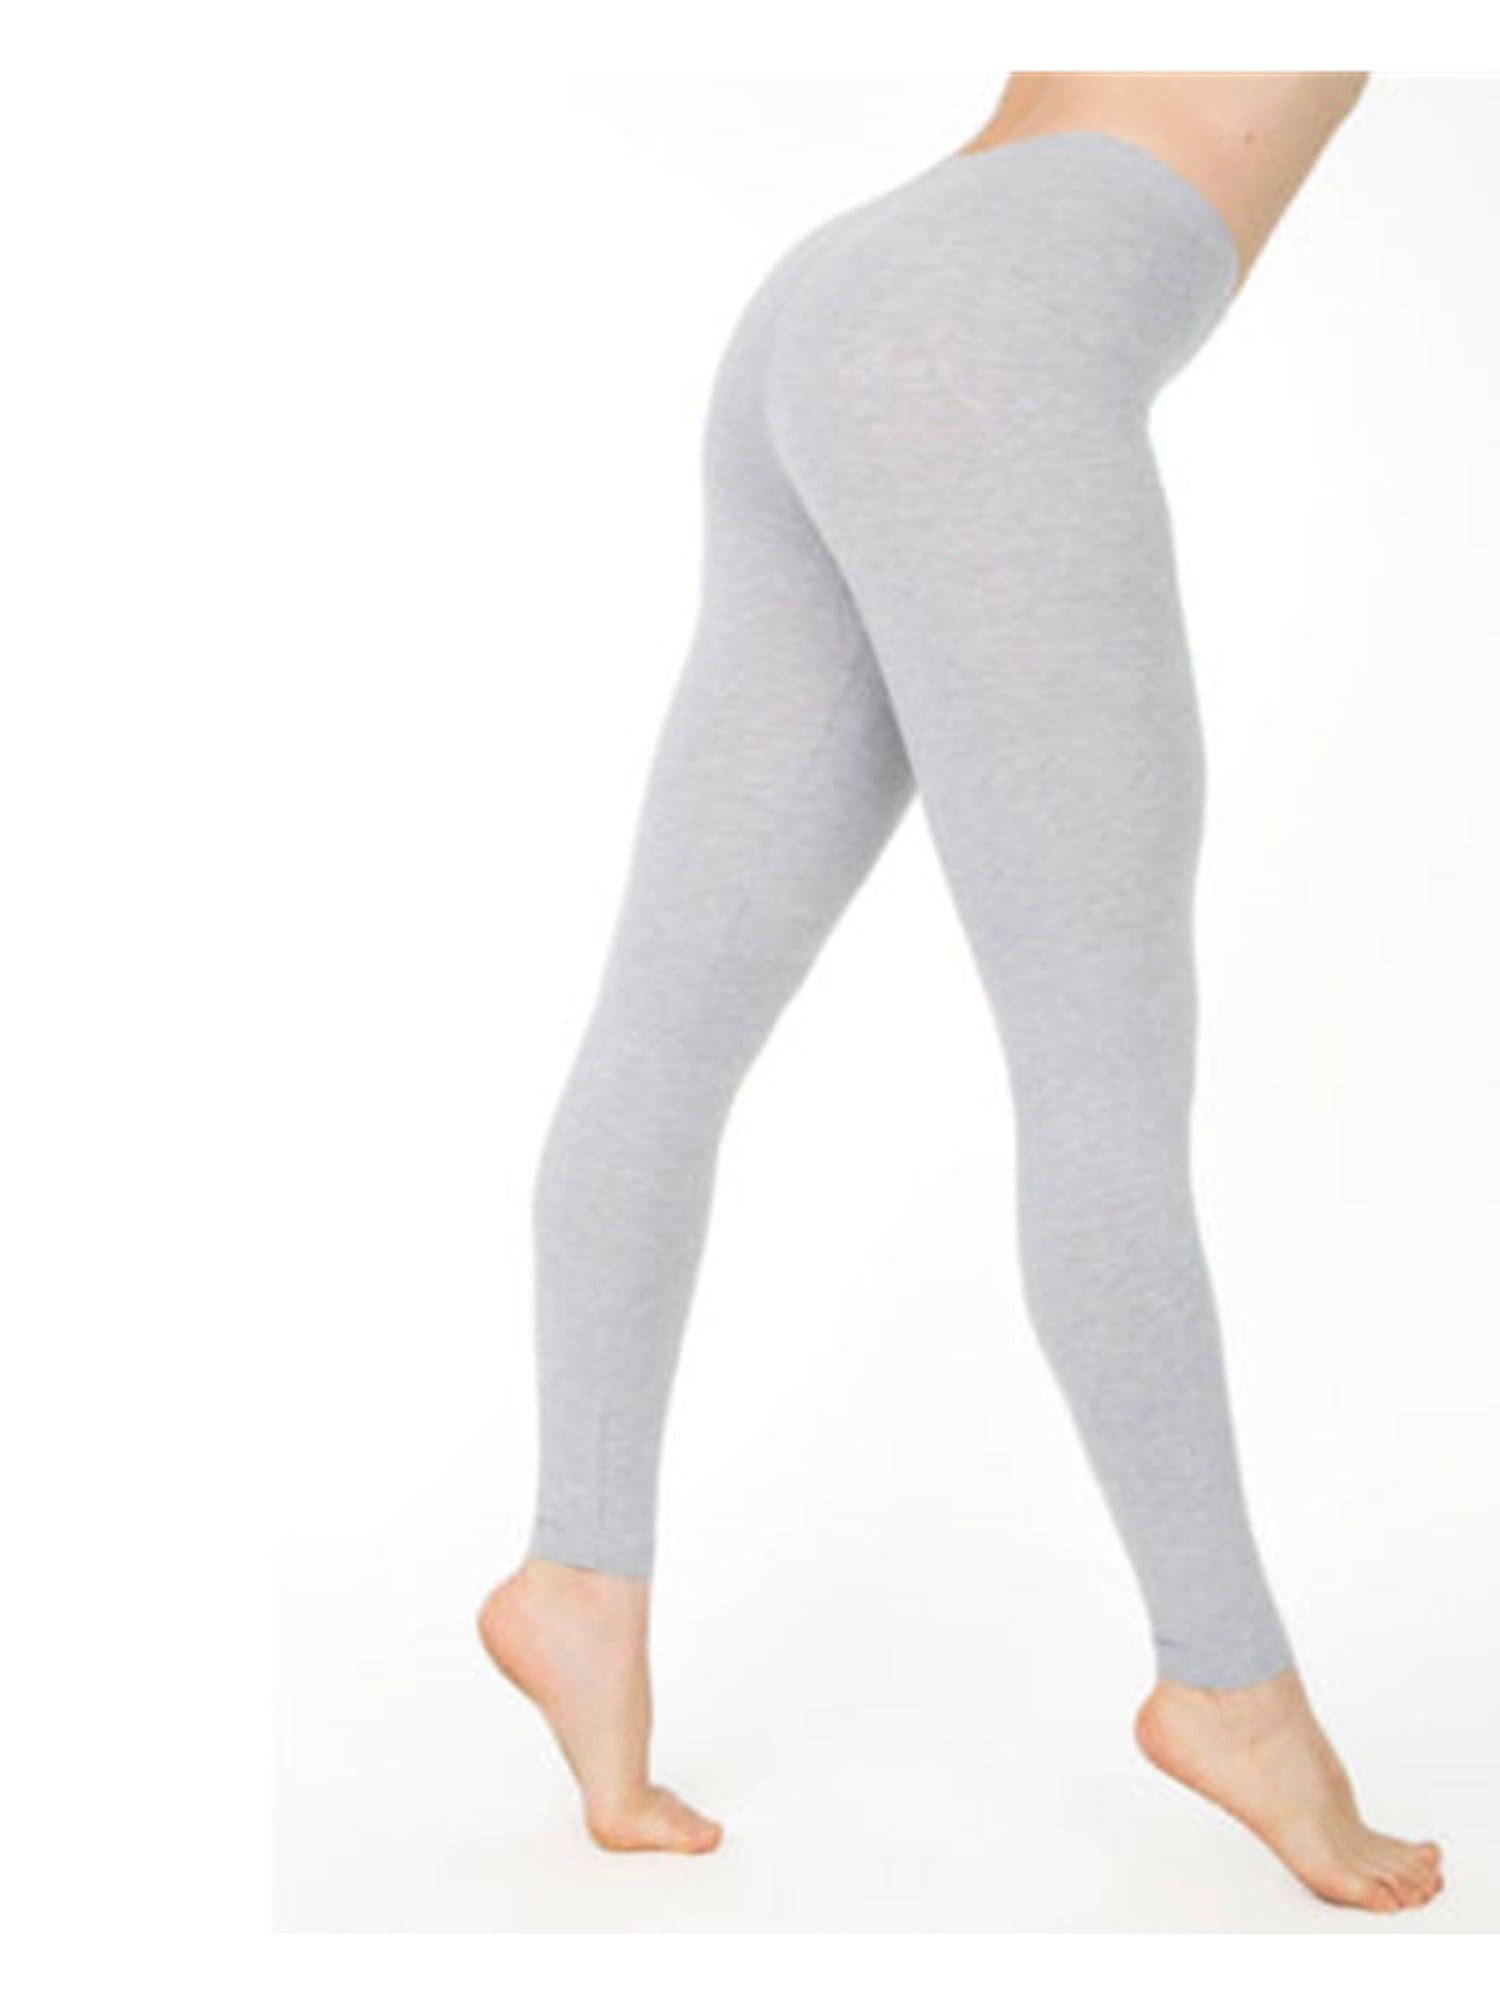 Women Leggings Yoga Pants Gym High Waist Stretch Fitness Sports Trousers Jogging